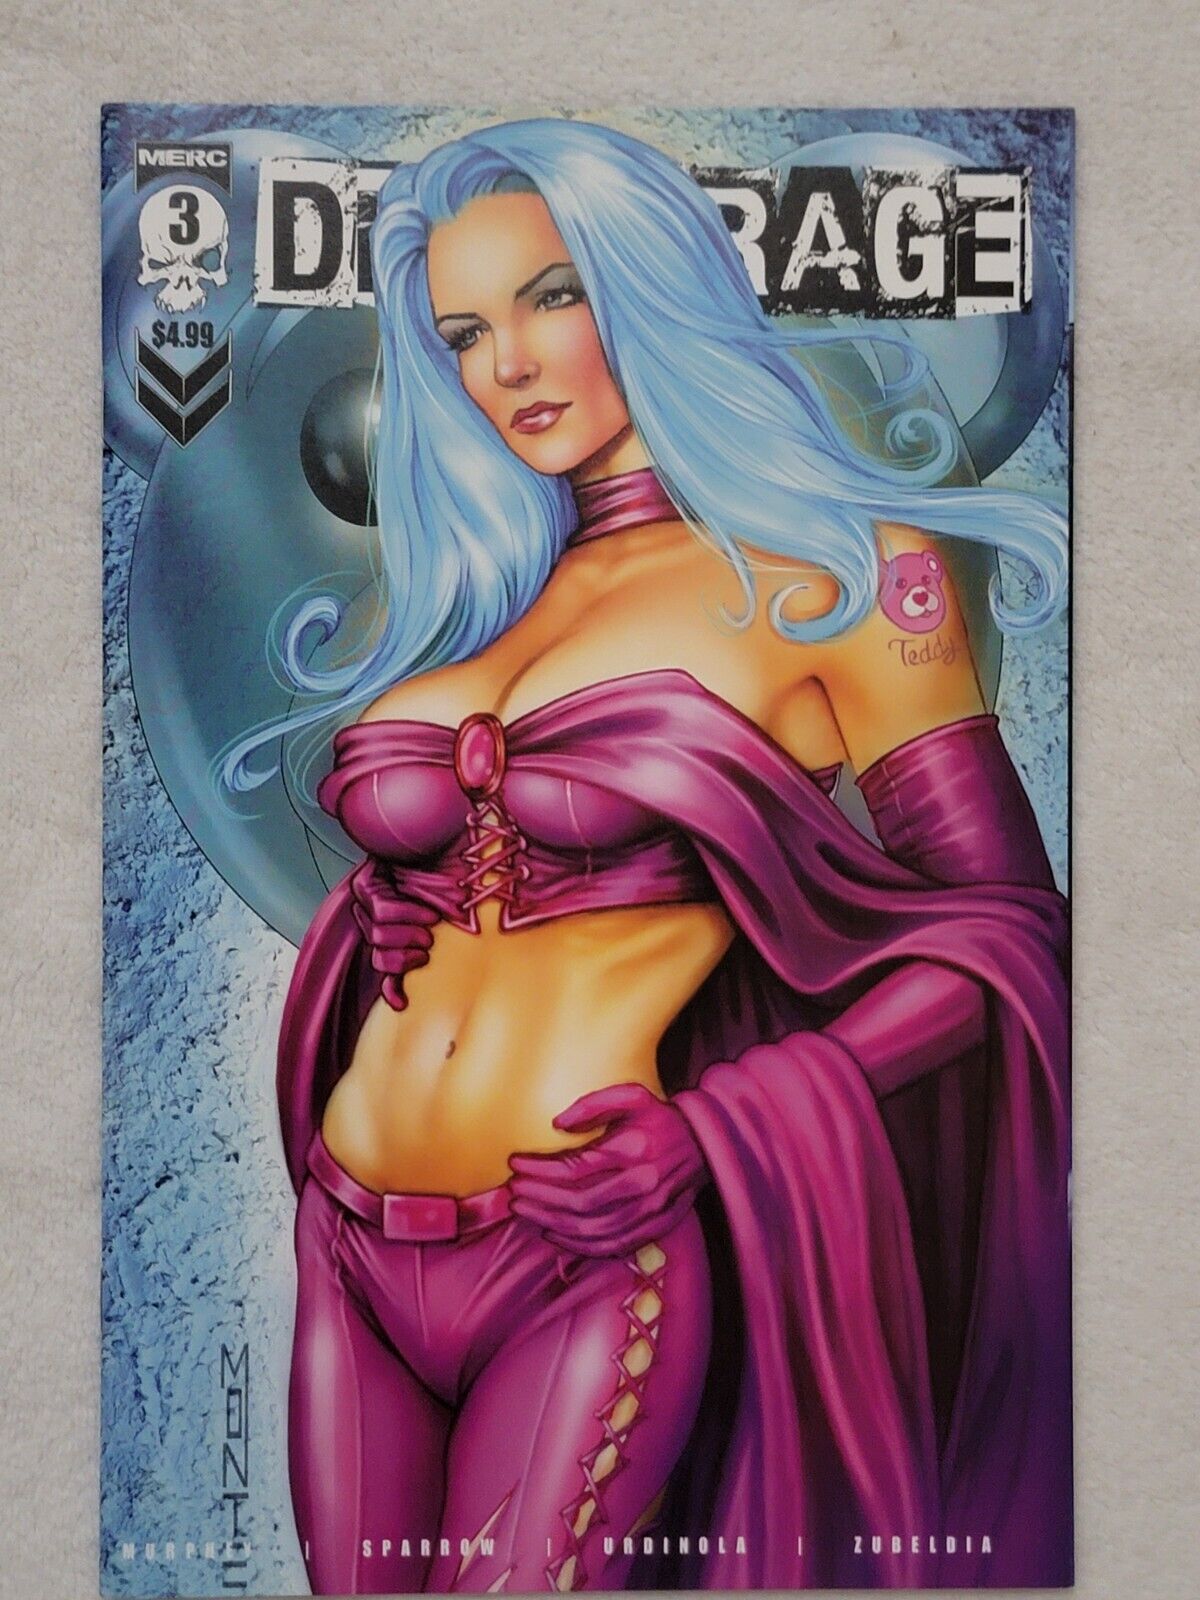 Deathrage #3 Cover  (Comic Book)  ♤